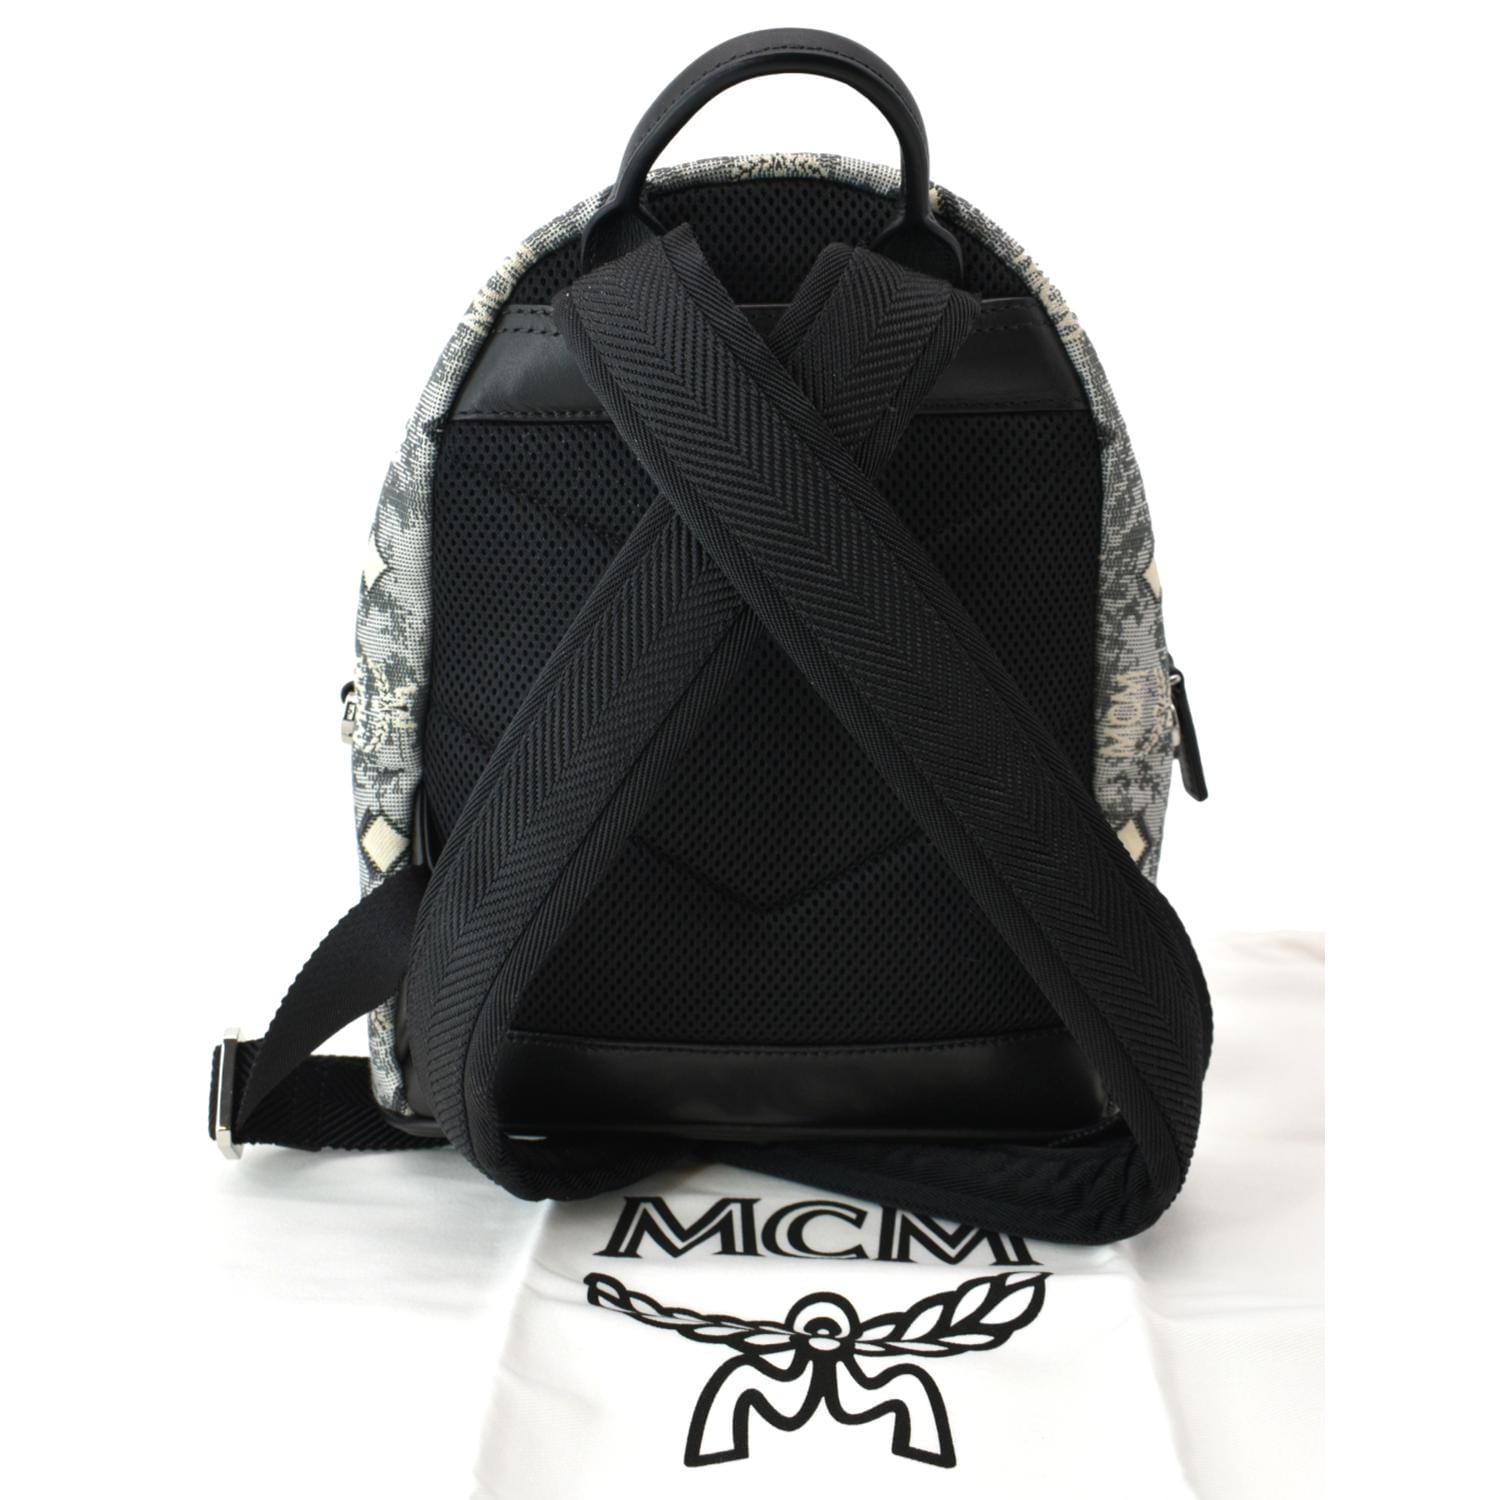  MCM Vintage Jacquard Mini Backpack Grey One Size